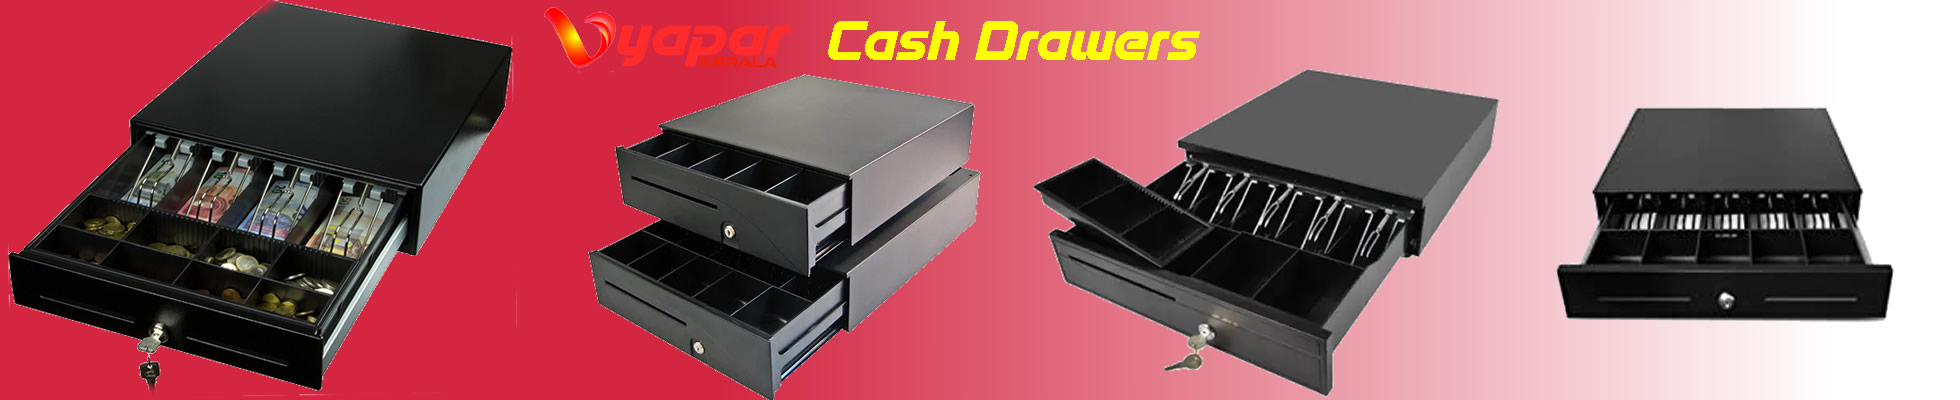 Cash Drawers